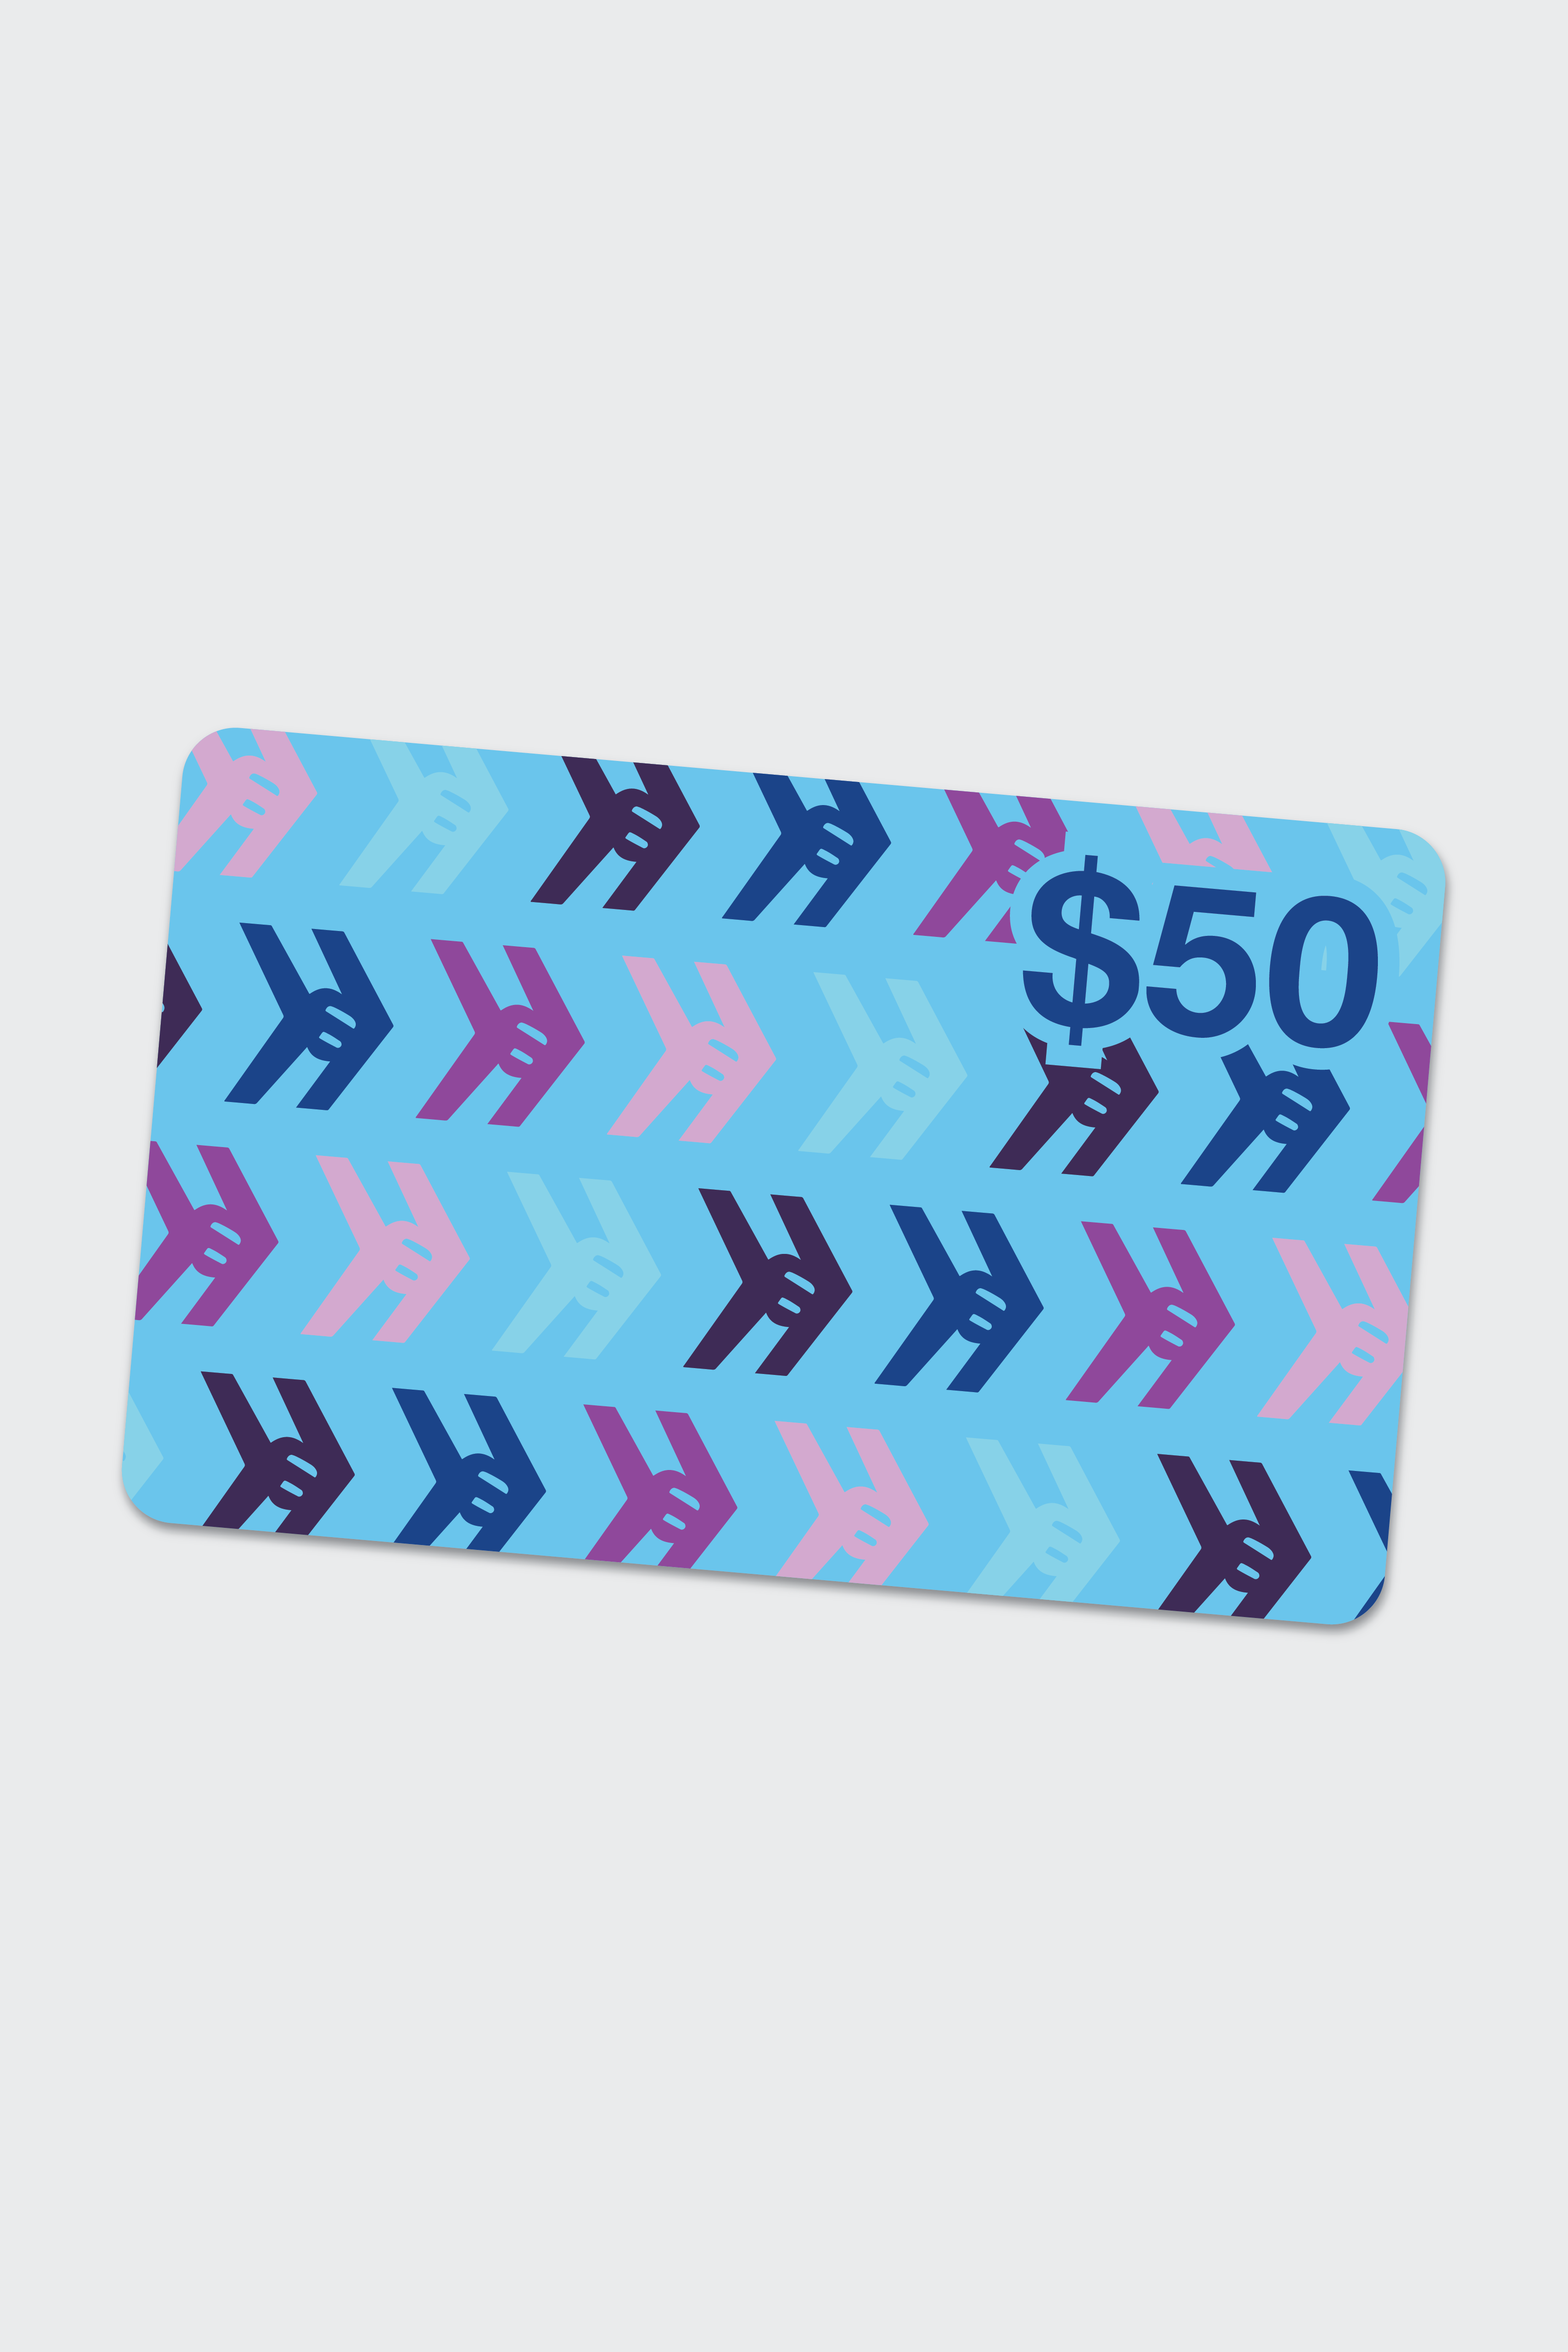 $50 Smosh Digital Gift Card